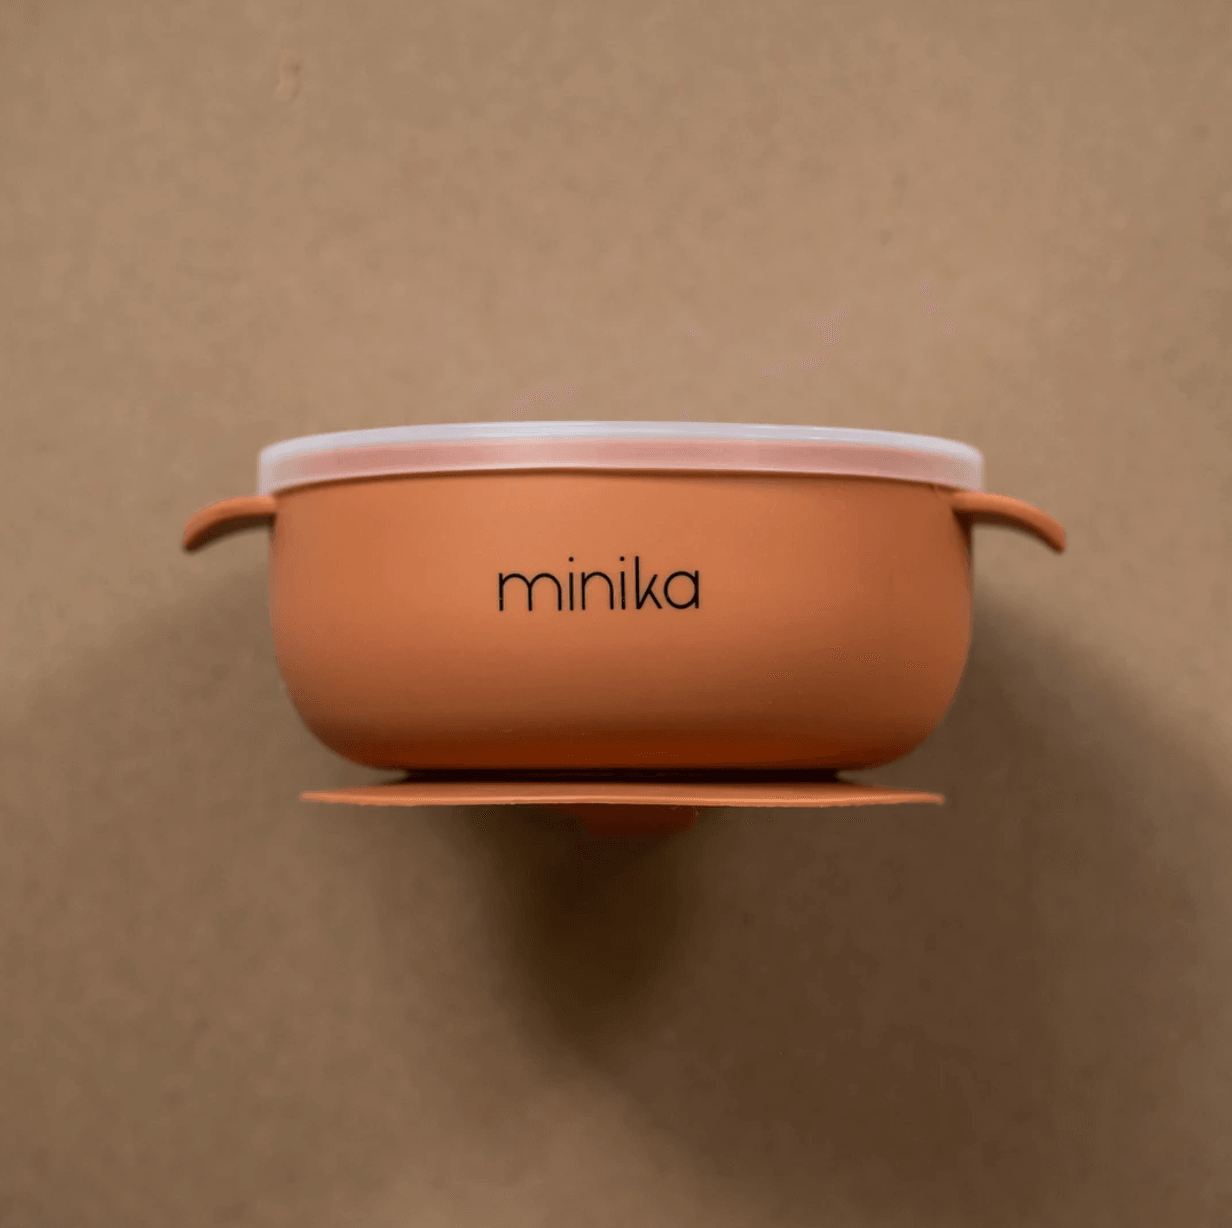 minika ginger coloured silicone bowl